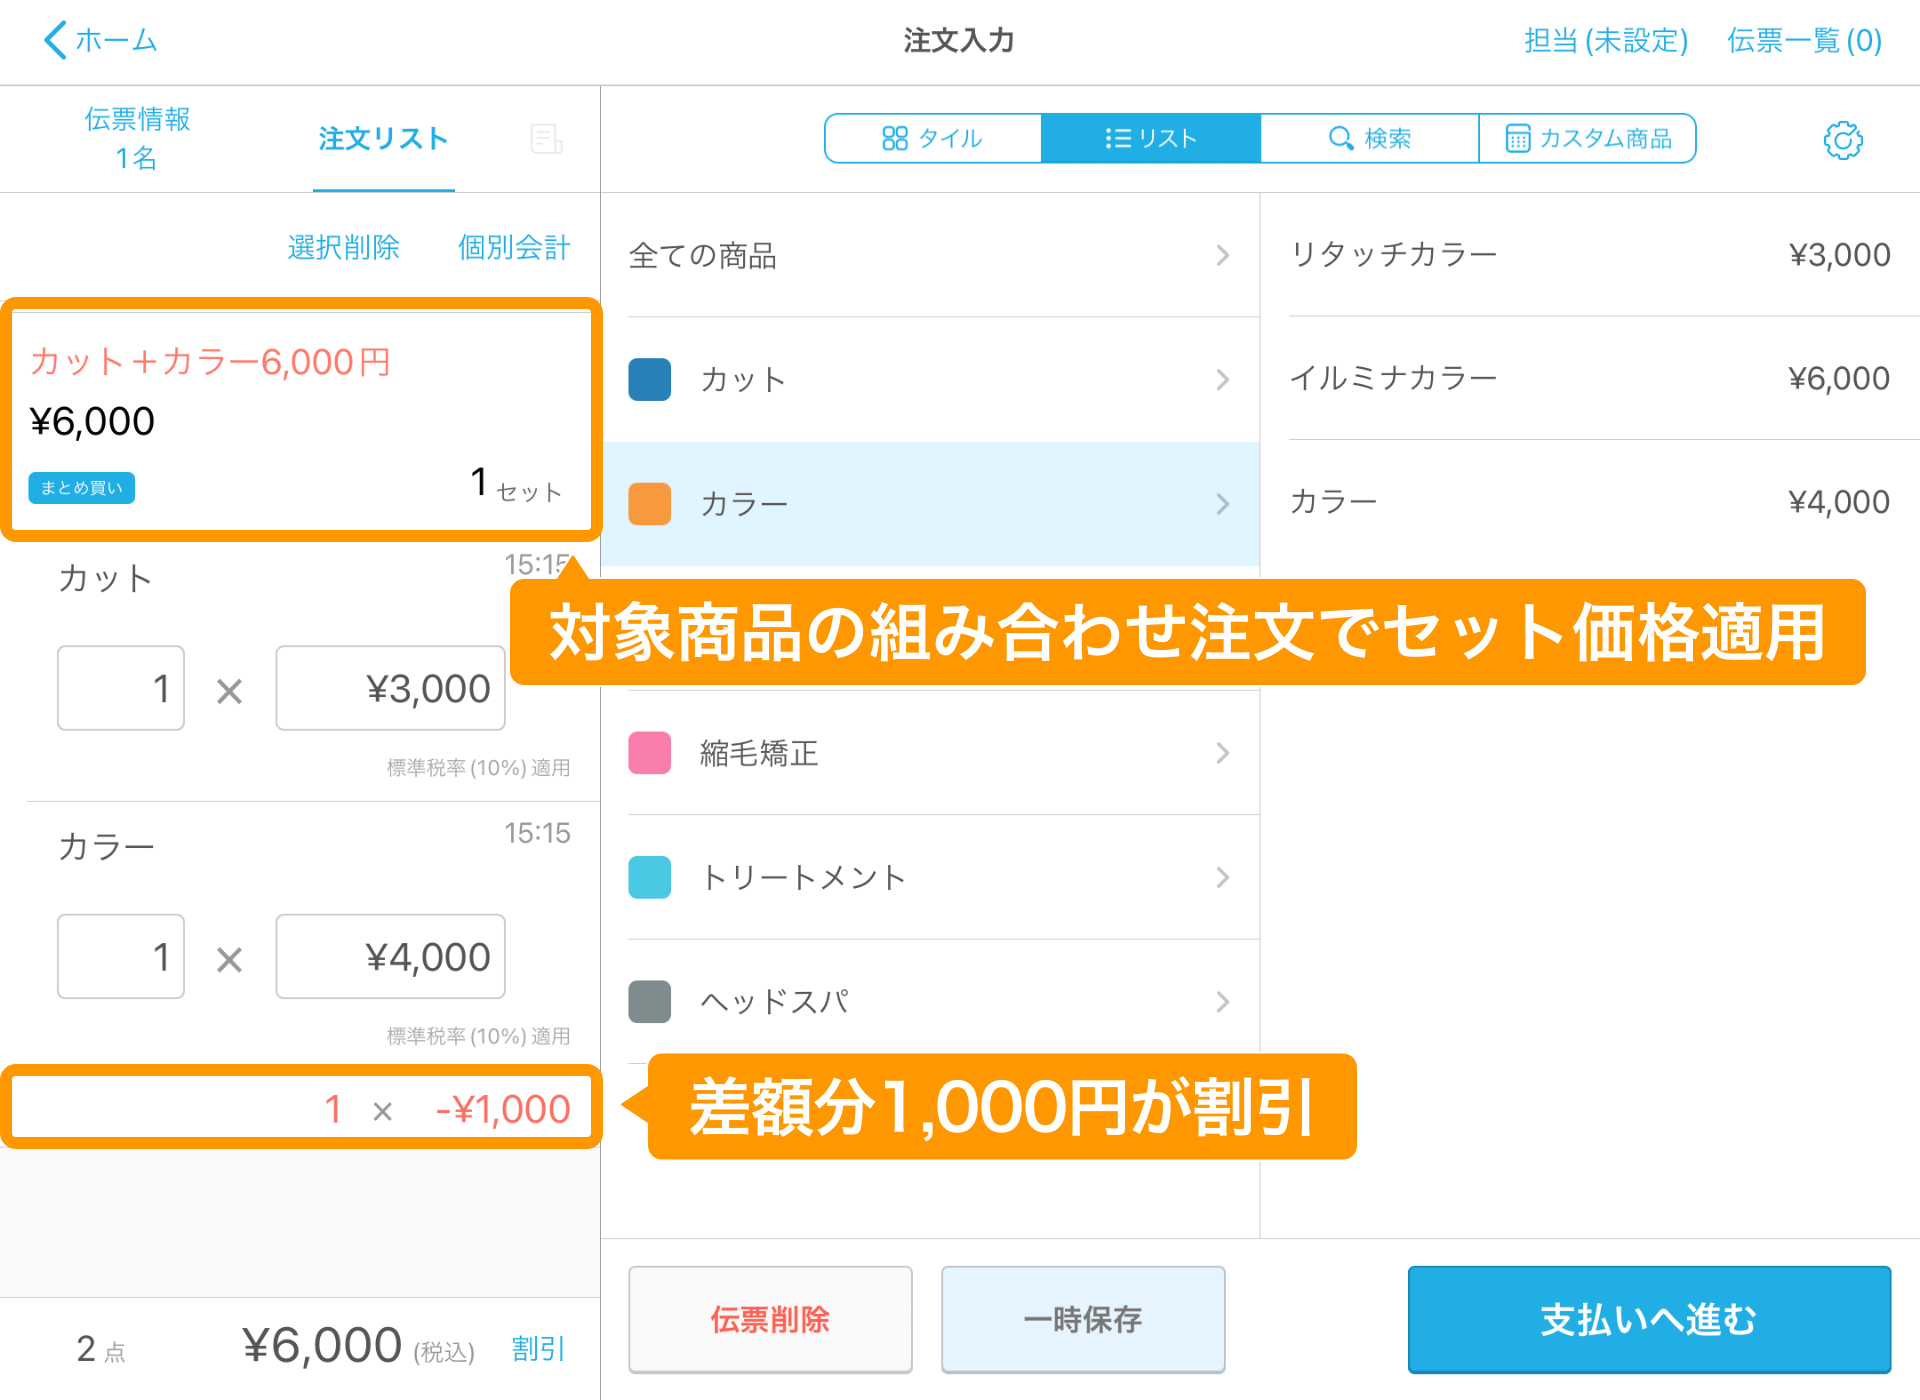 07 Airレジ 注文入力画面 対象商品の組み合わせ注文でセット価格適用 差額分1,000円が割引